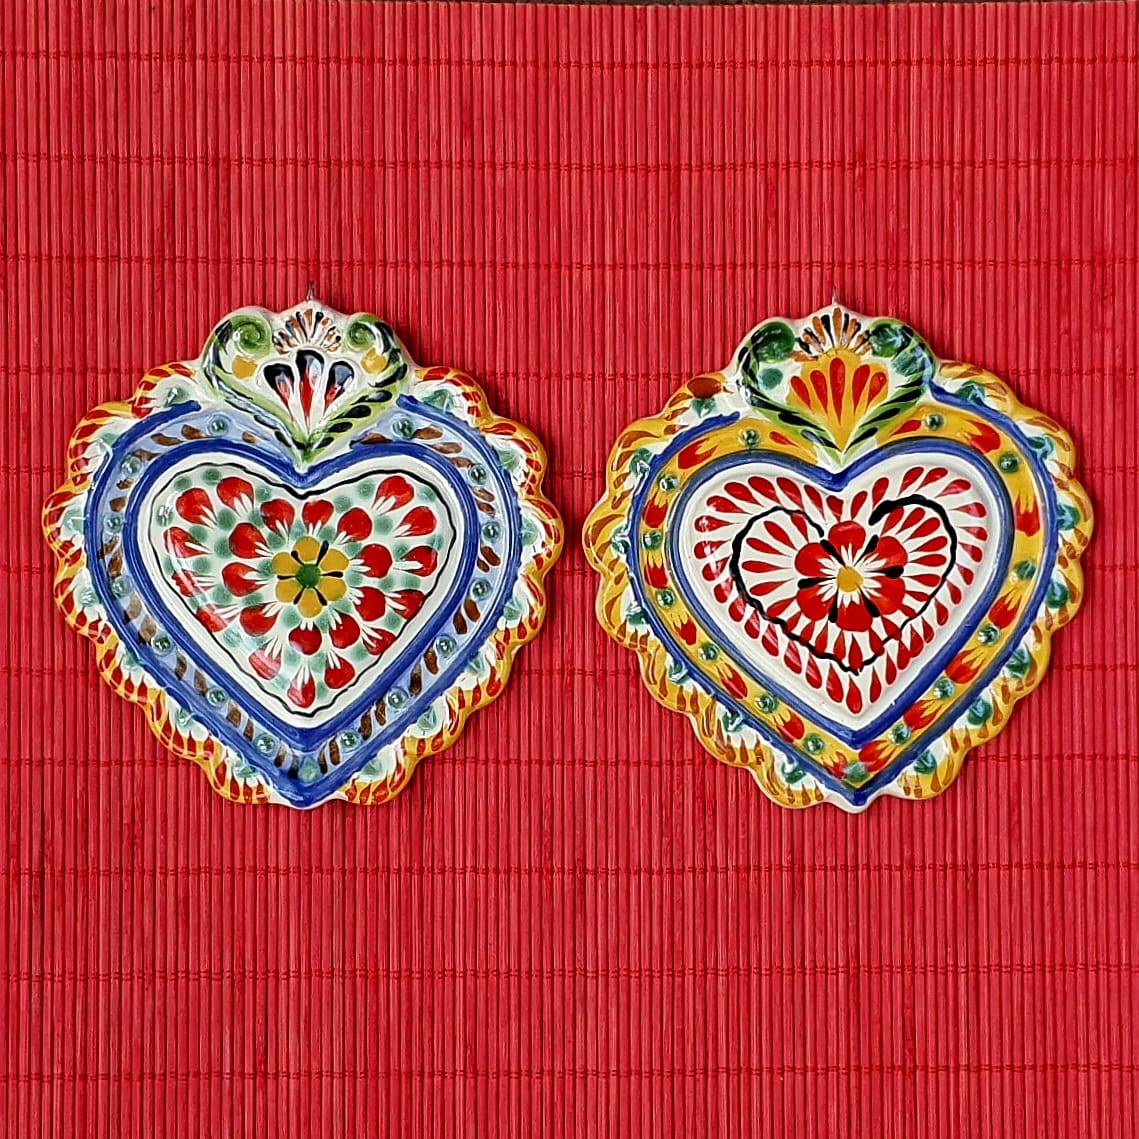 Ornament Love Heart 5x5 in Flat Set of 2 MultiColors